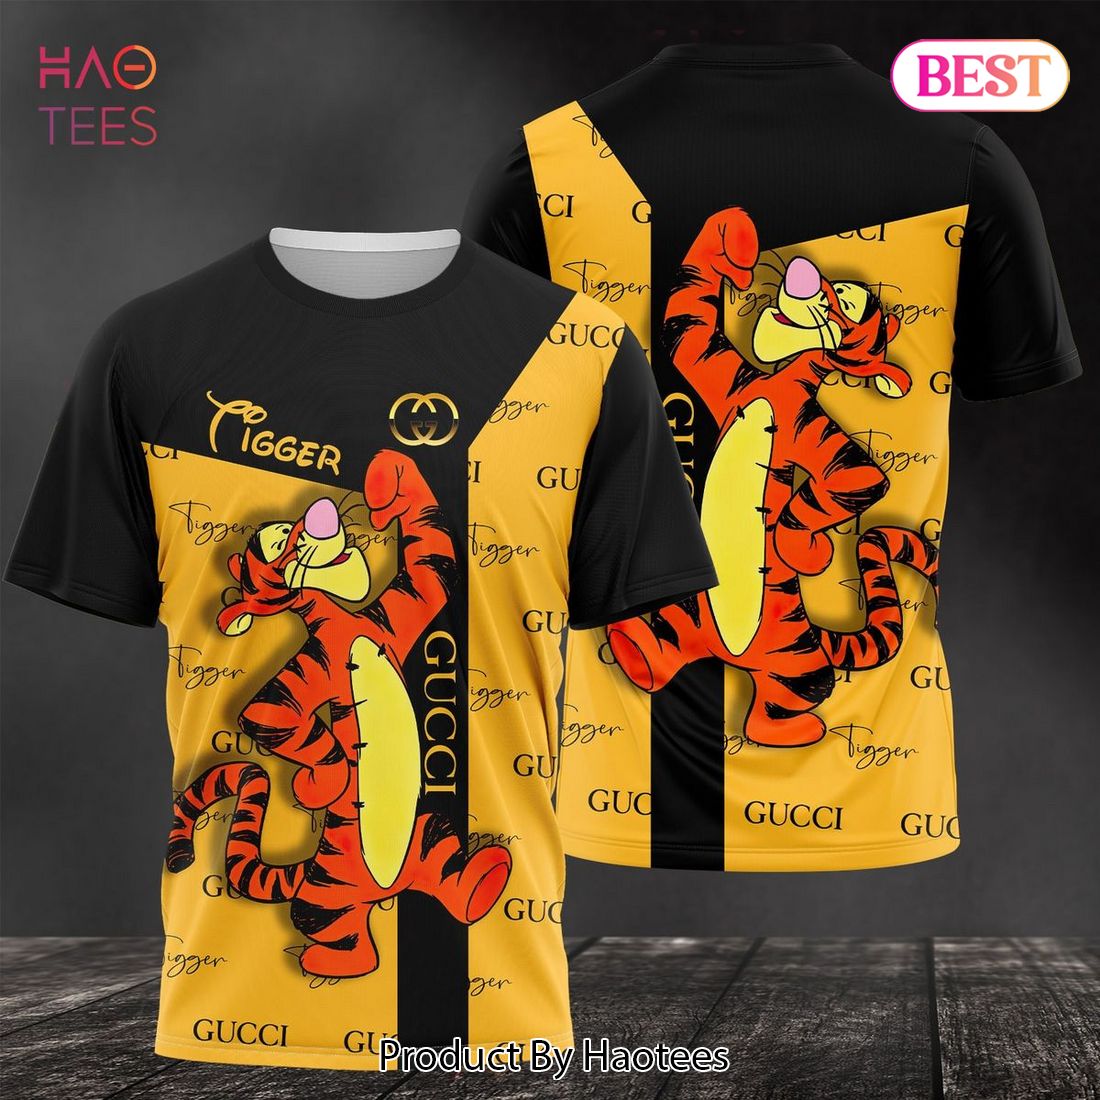 HOT Gucci Luxury Brand Disney Tigger Black Mix Gold 3D T-Shirt Limited Edition